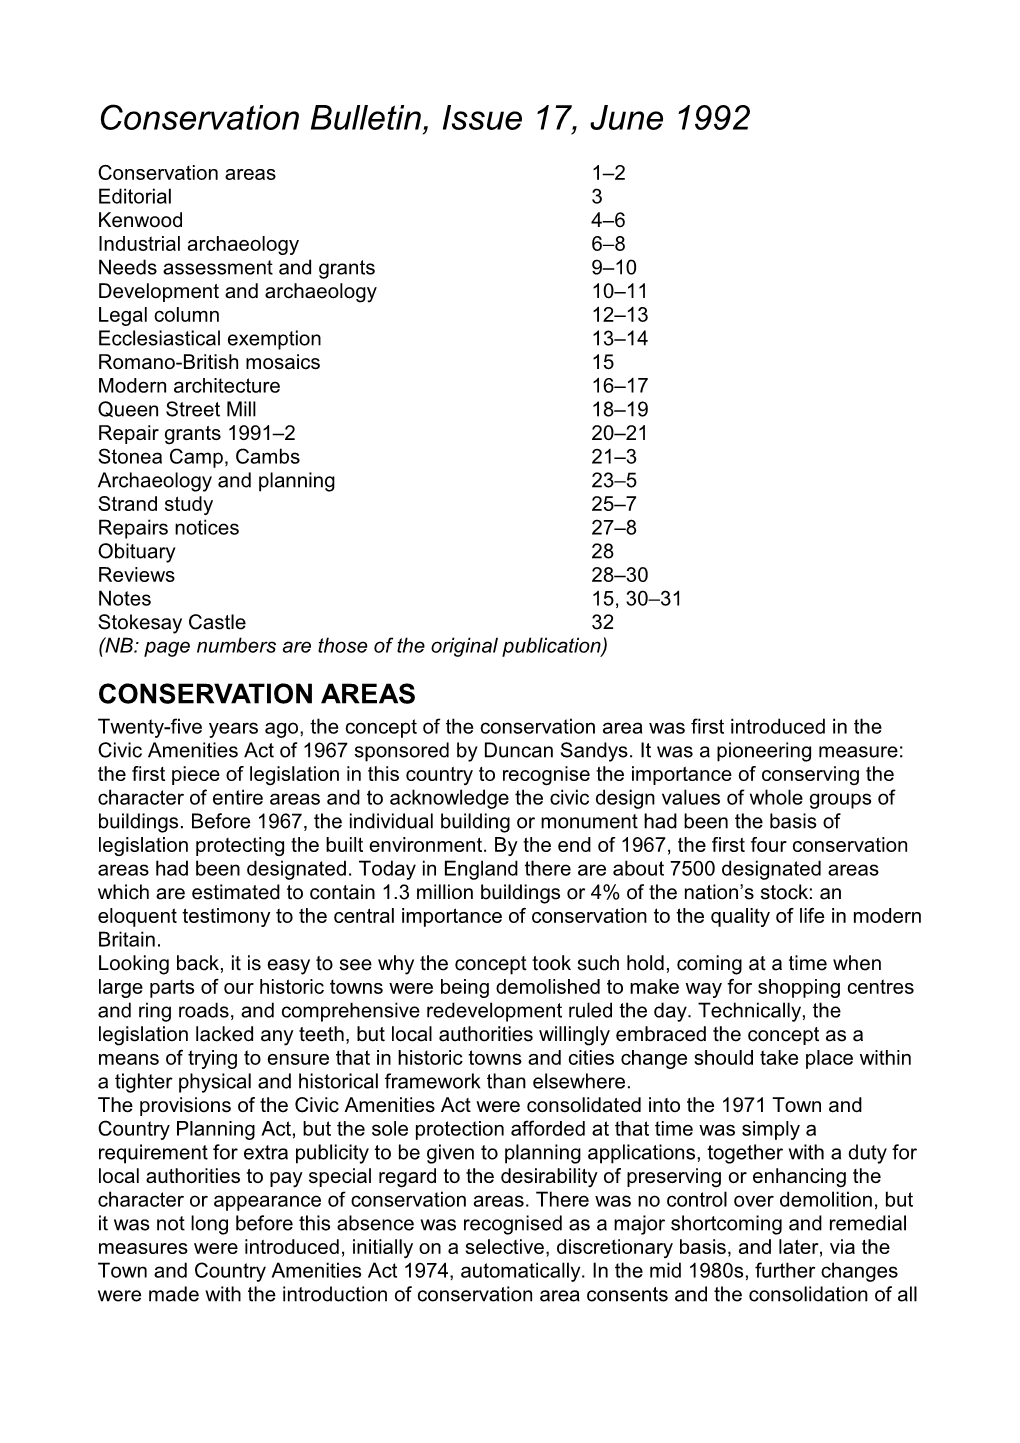 Conservation Bulletin 17